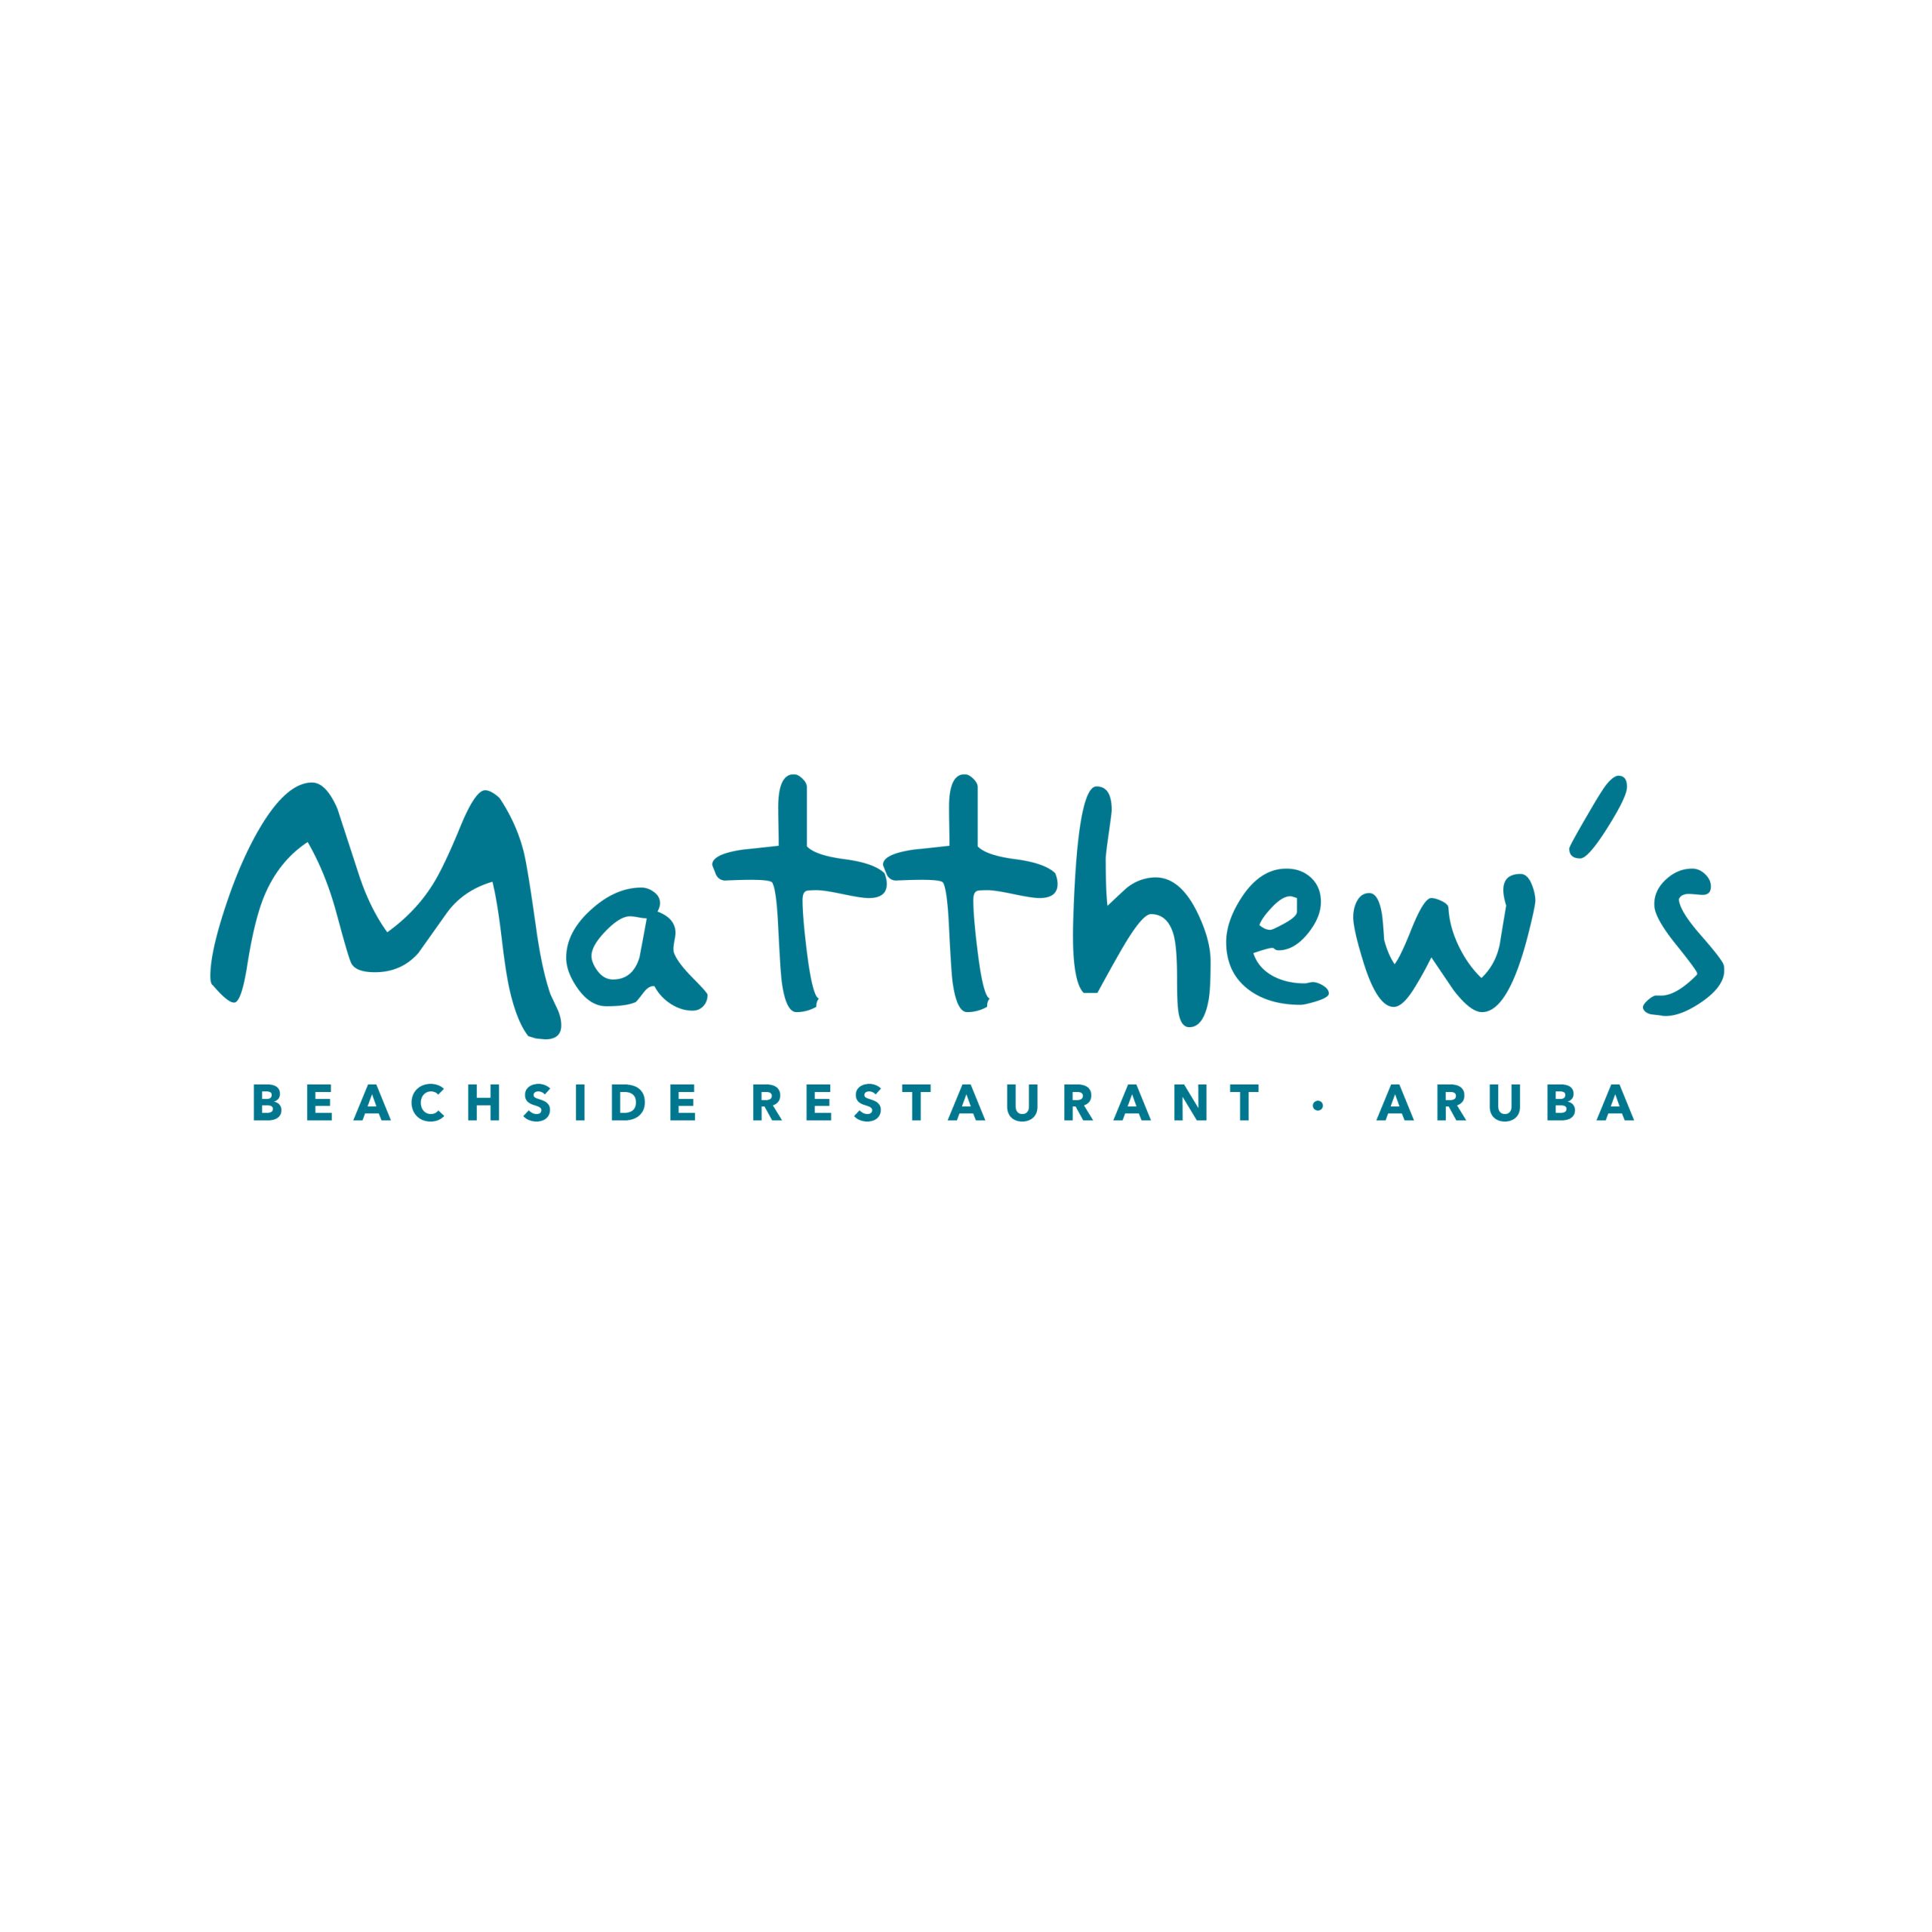 Matthew's Beachside Restaurant Aruba